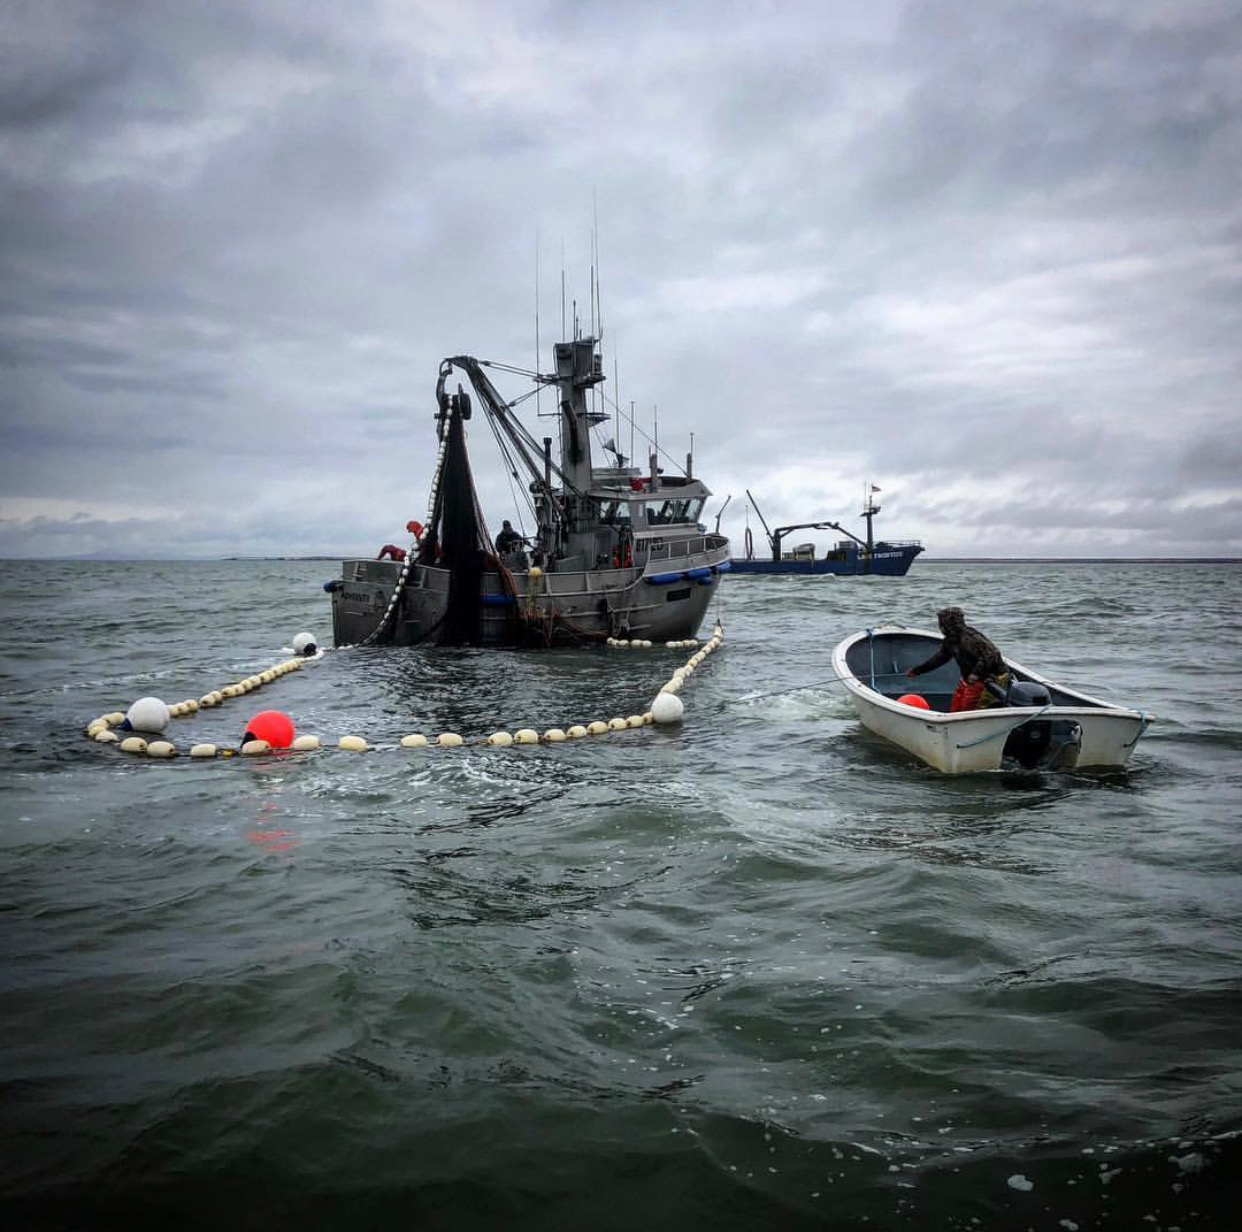 Seining for herring in Togiak, Bristol Bay, Alaska. Photo by Blake Benson.